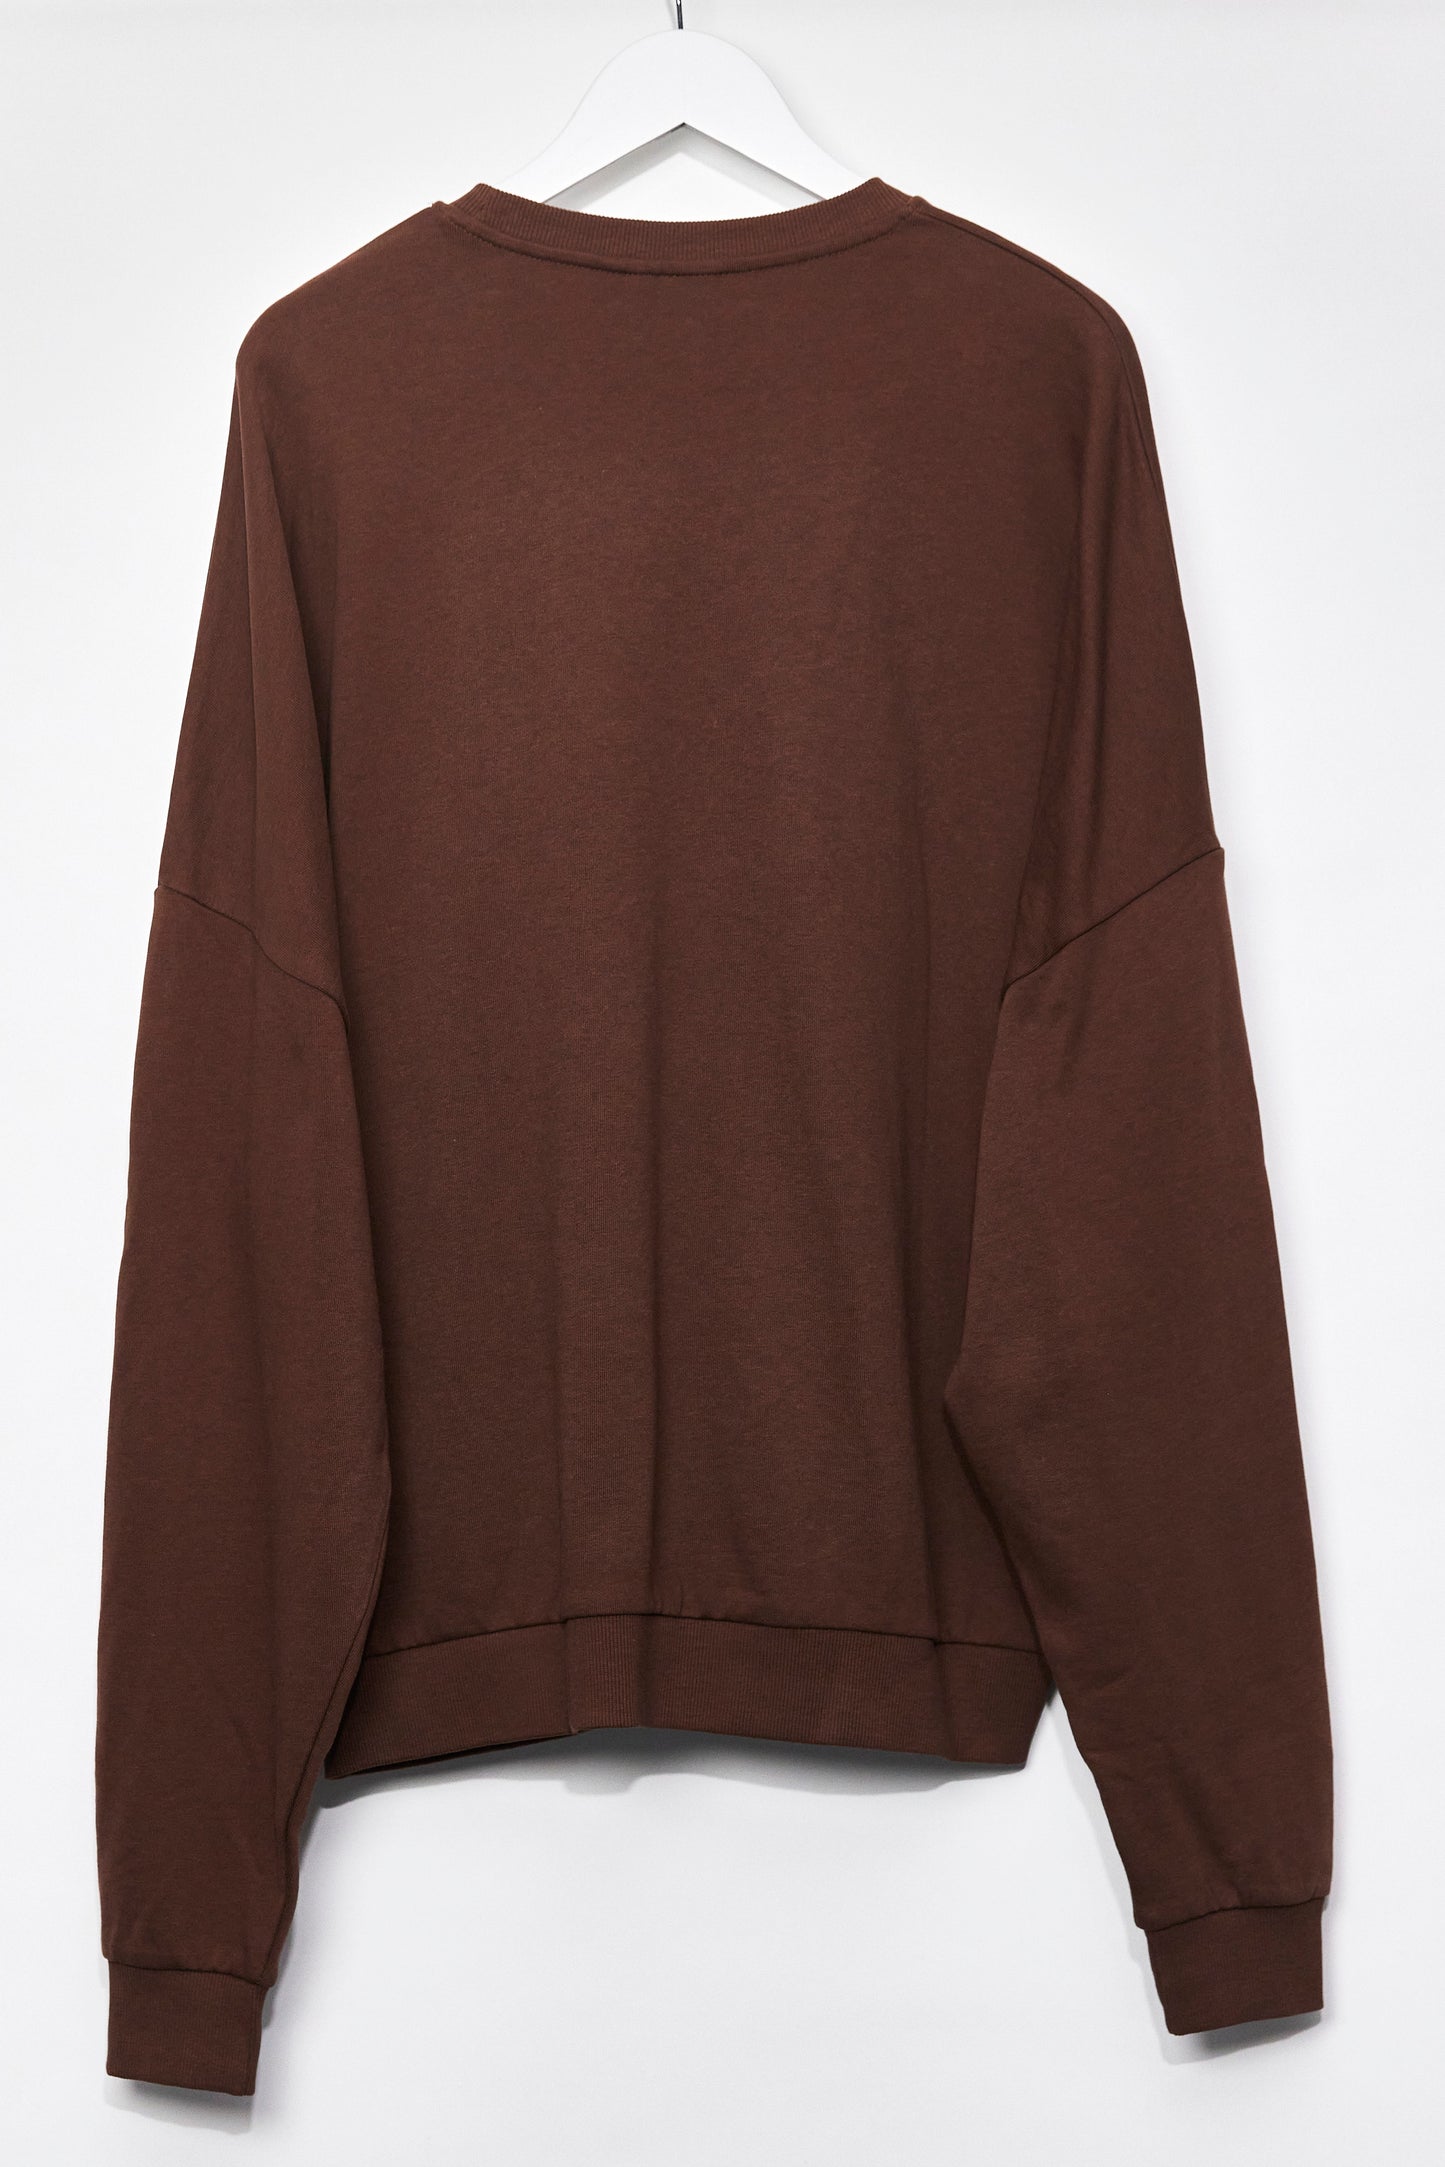 Mens ASOS Oversized Brown Sweatshirt size Medium